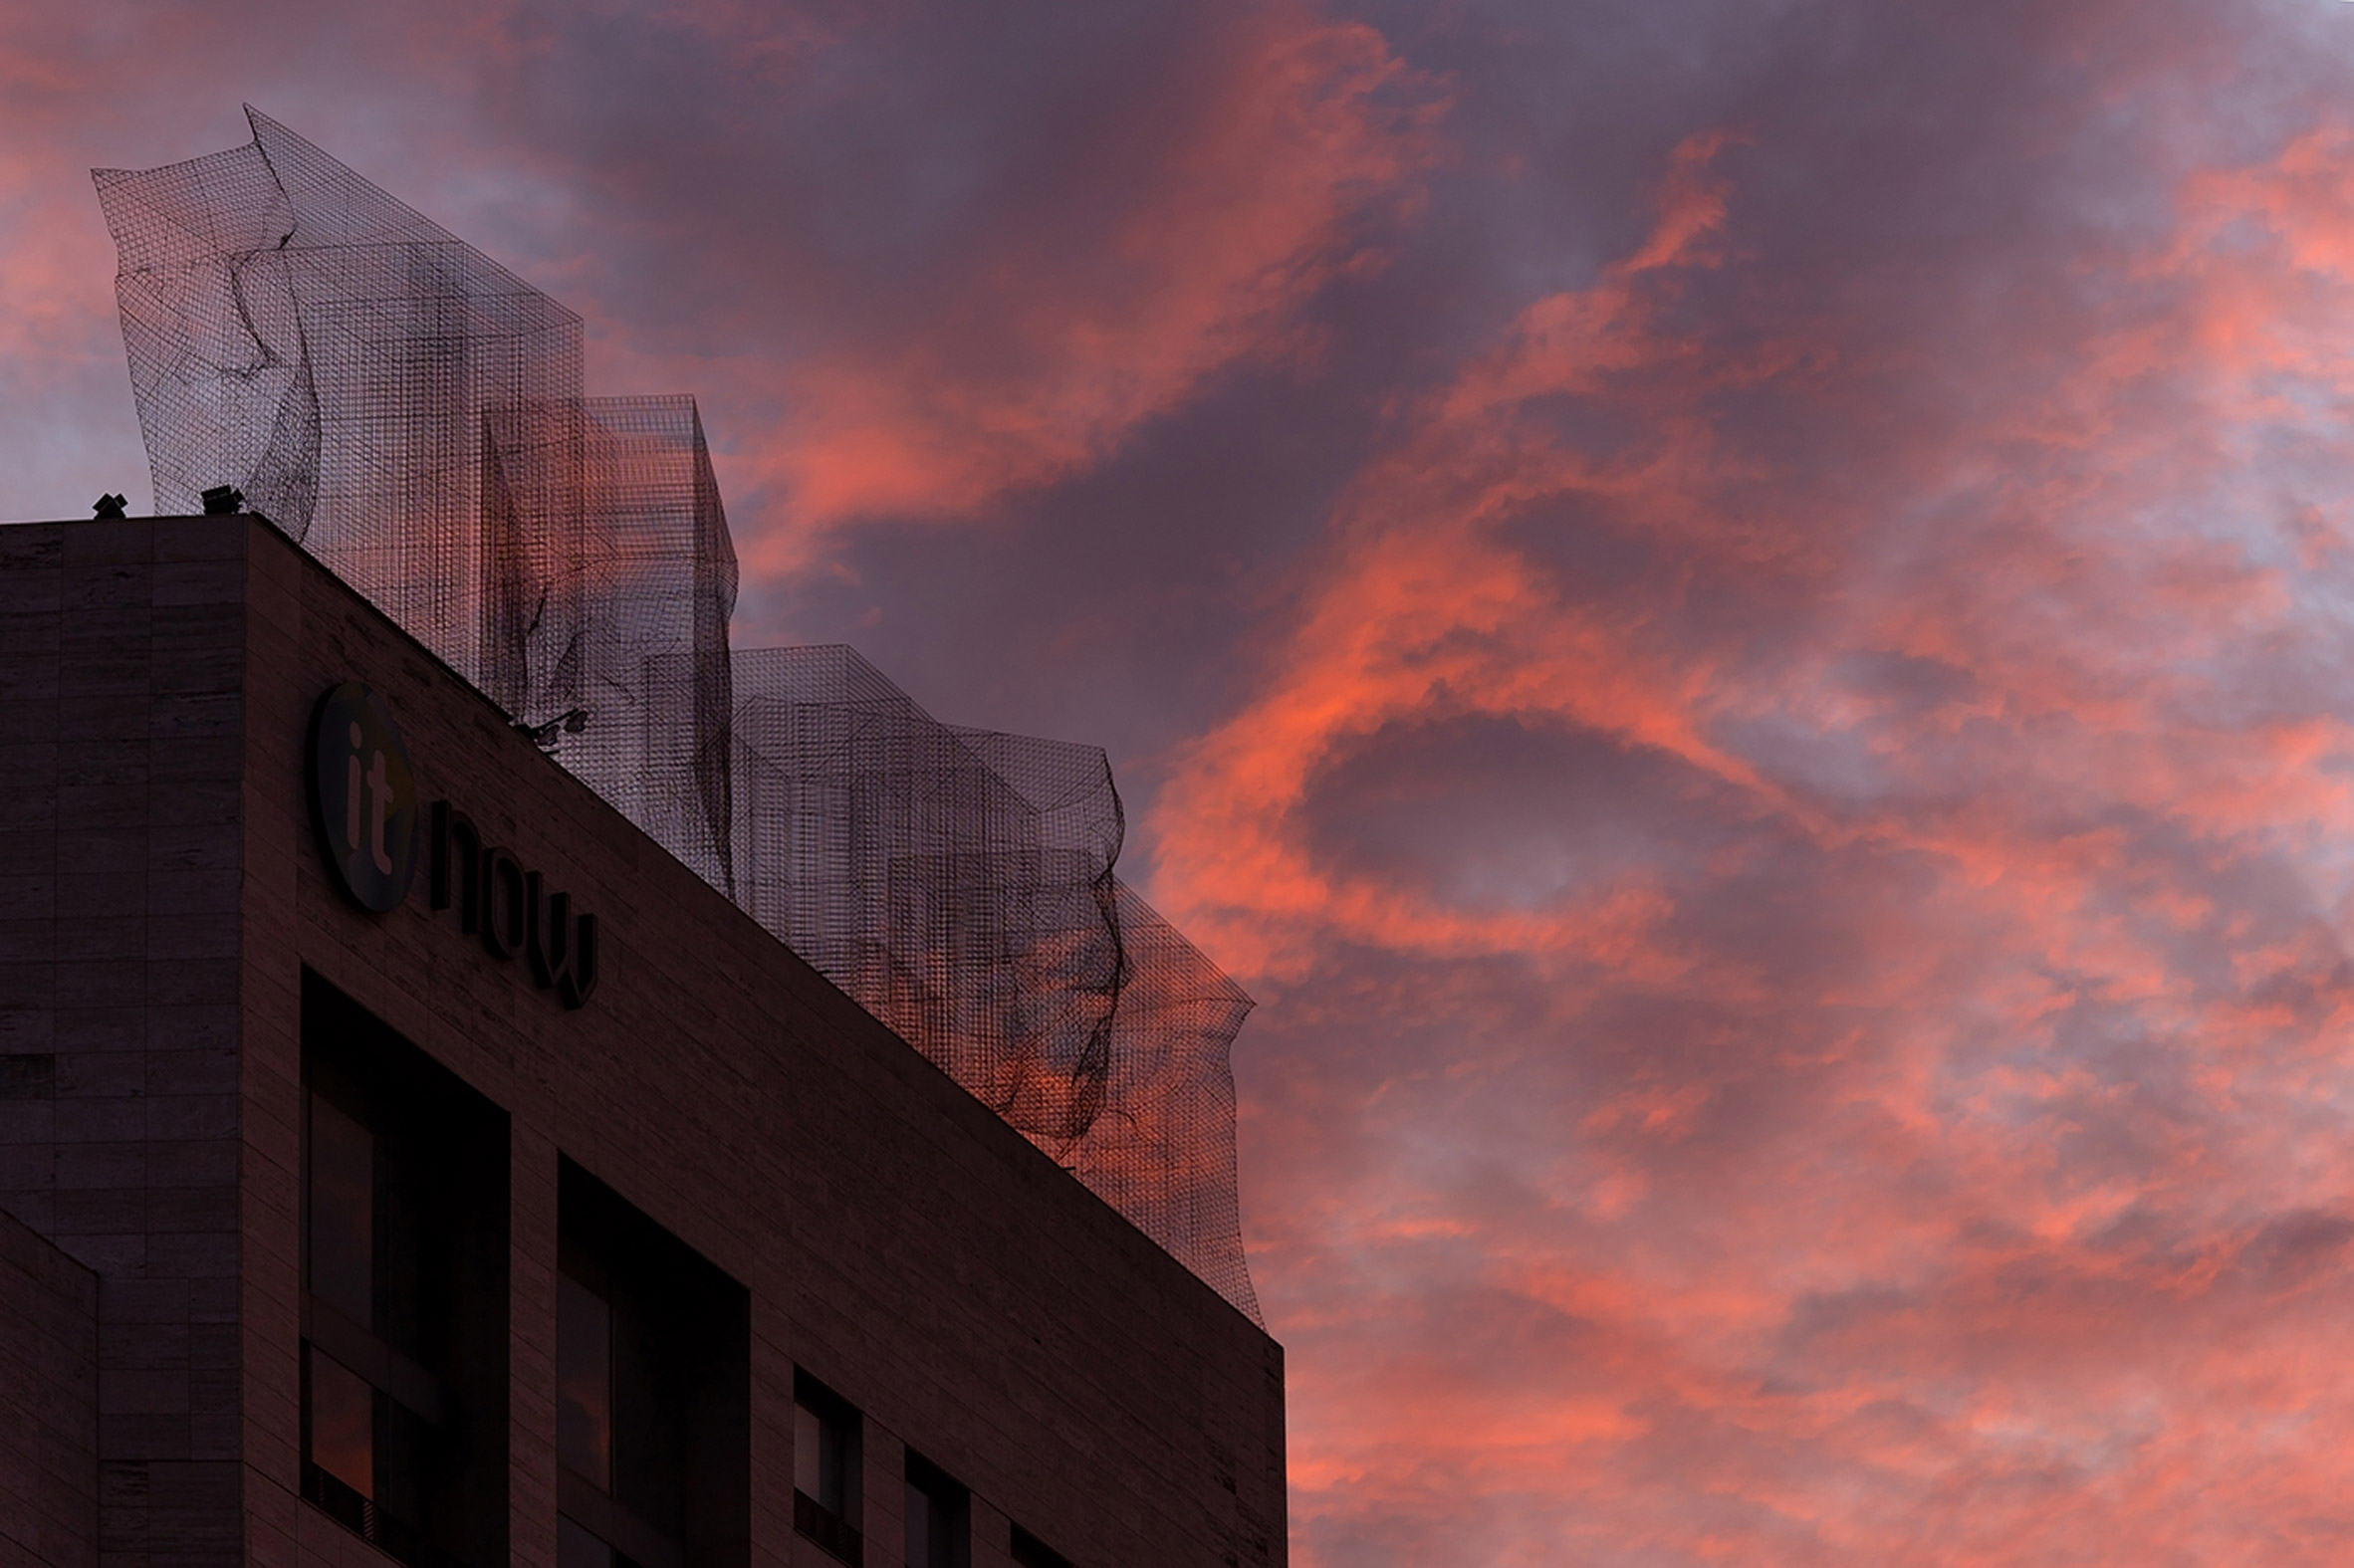 Edoardo Tresoldi installs wire mesh sculpture on roof of a Barcelona building